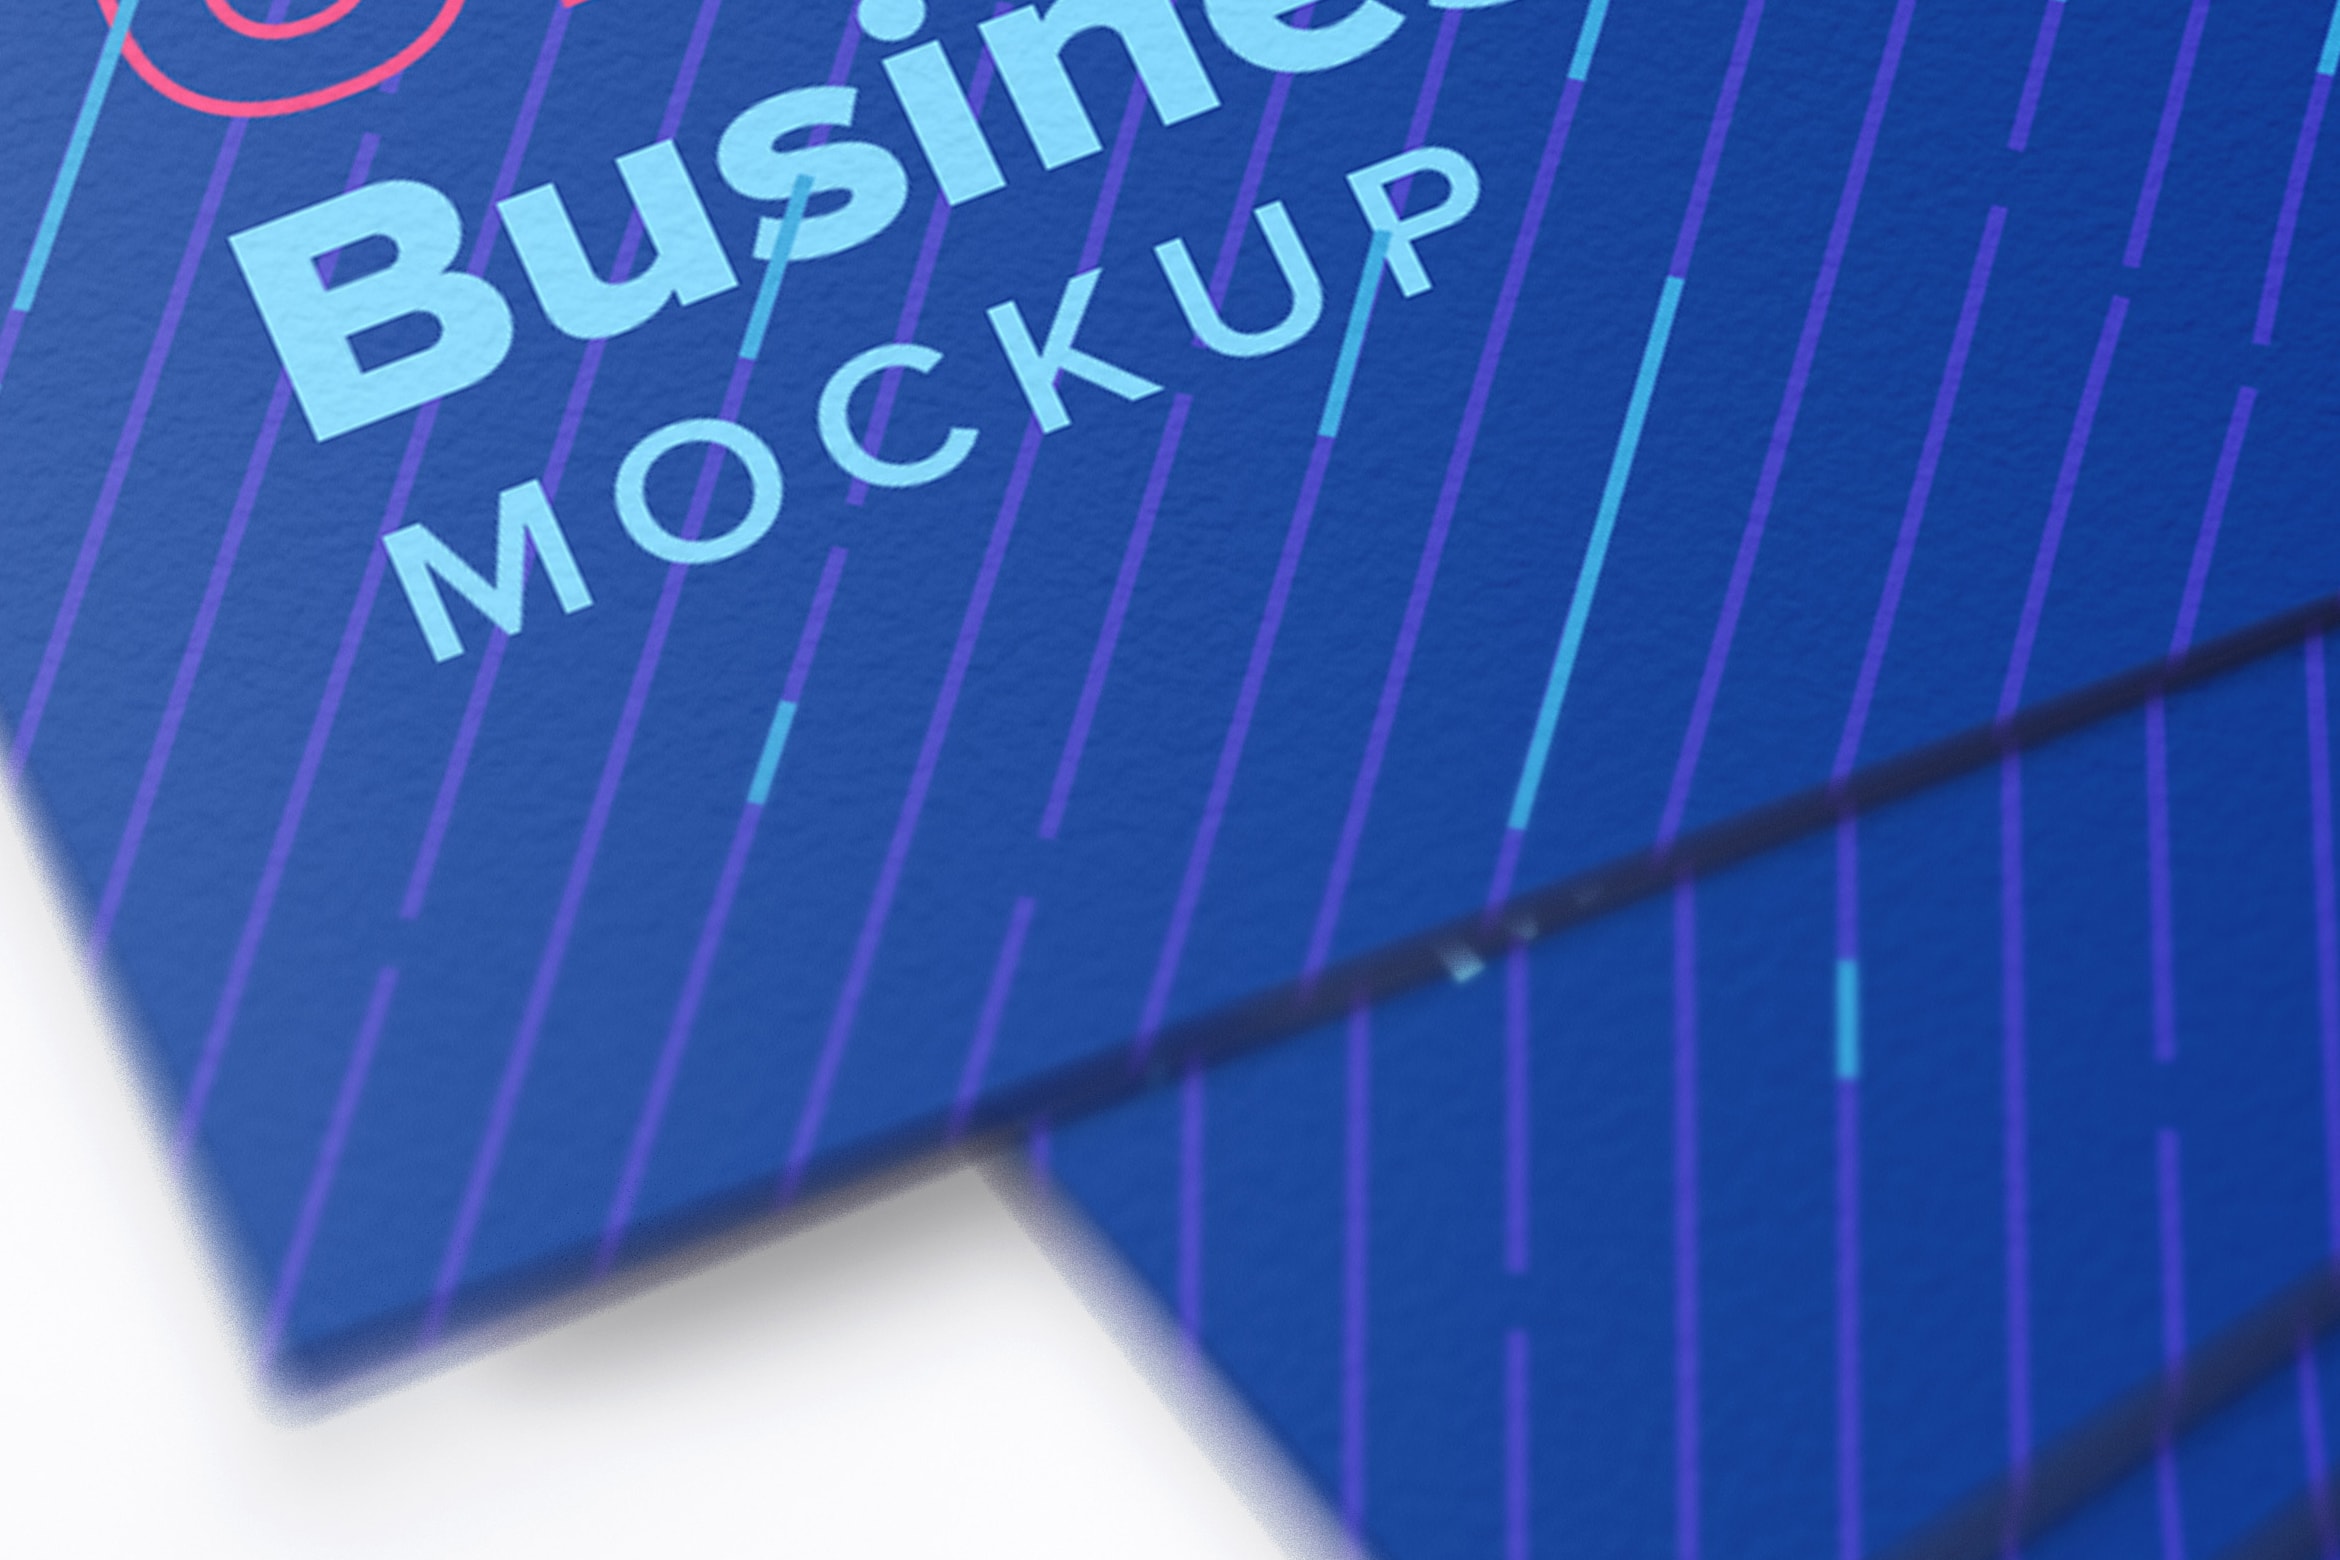 UK尺寸标准企业名片设计效果图预览样机模板04 UK Business Cards Mockup 04插图(1)